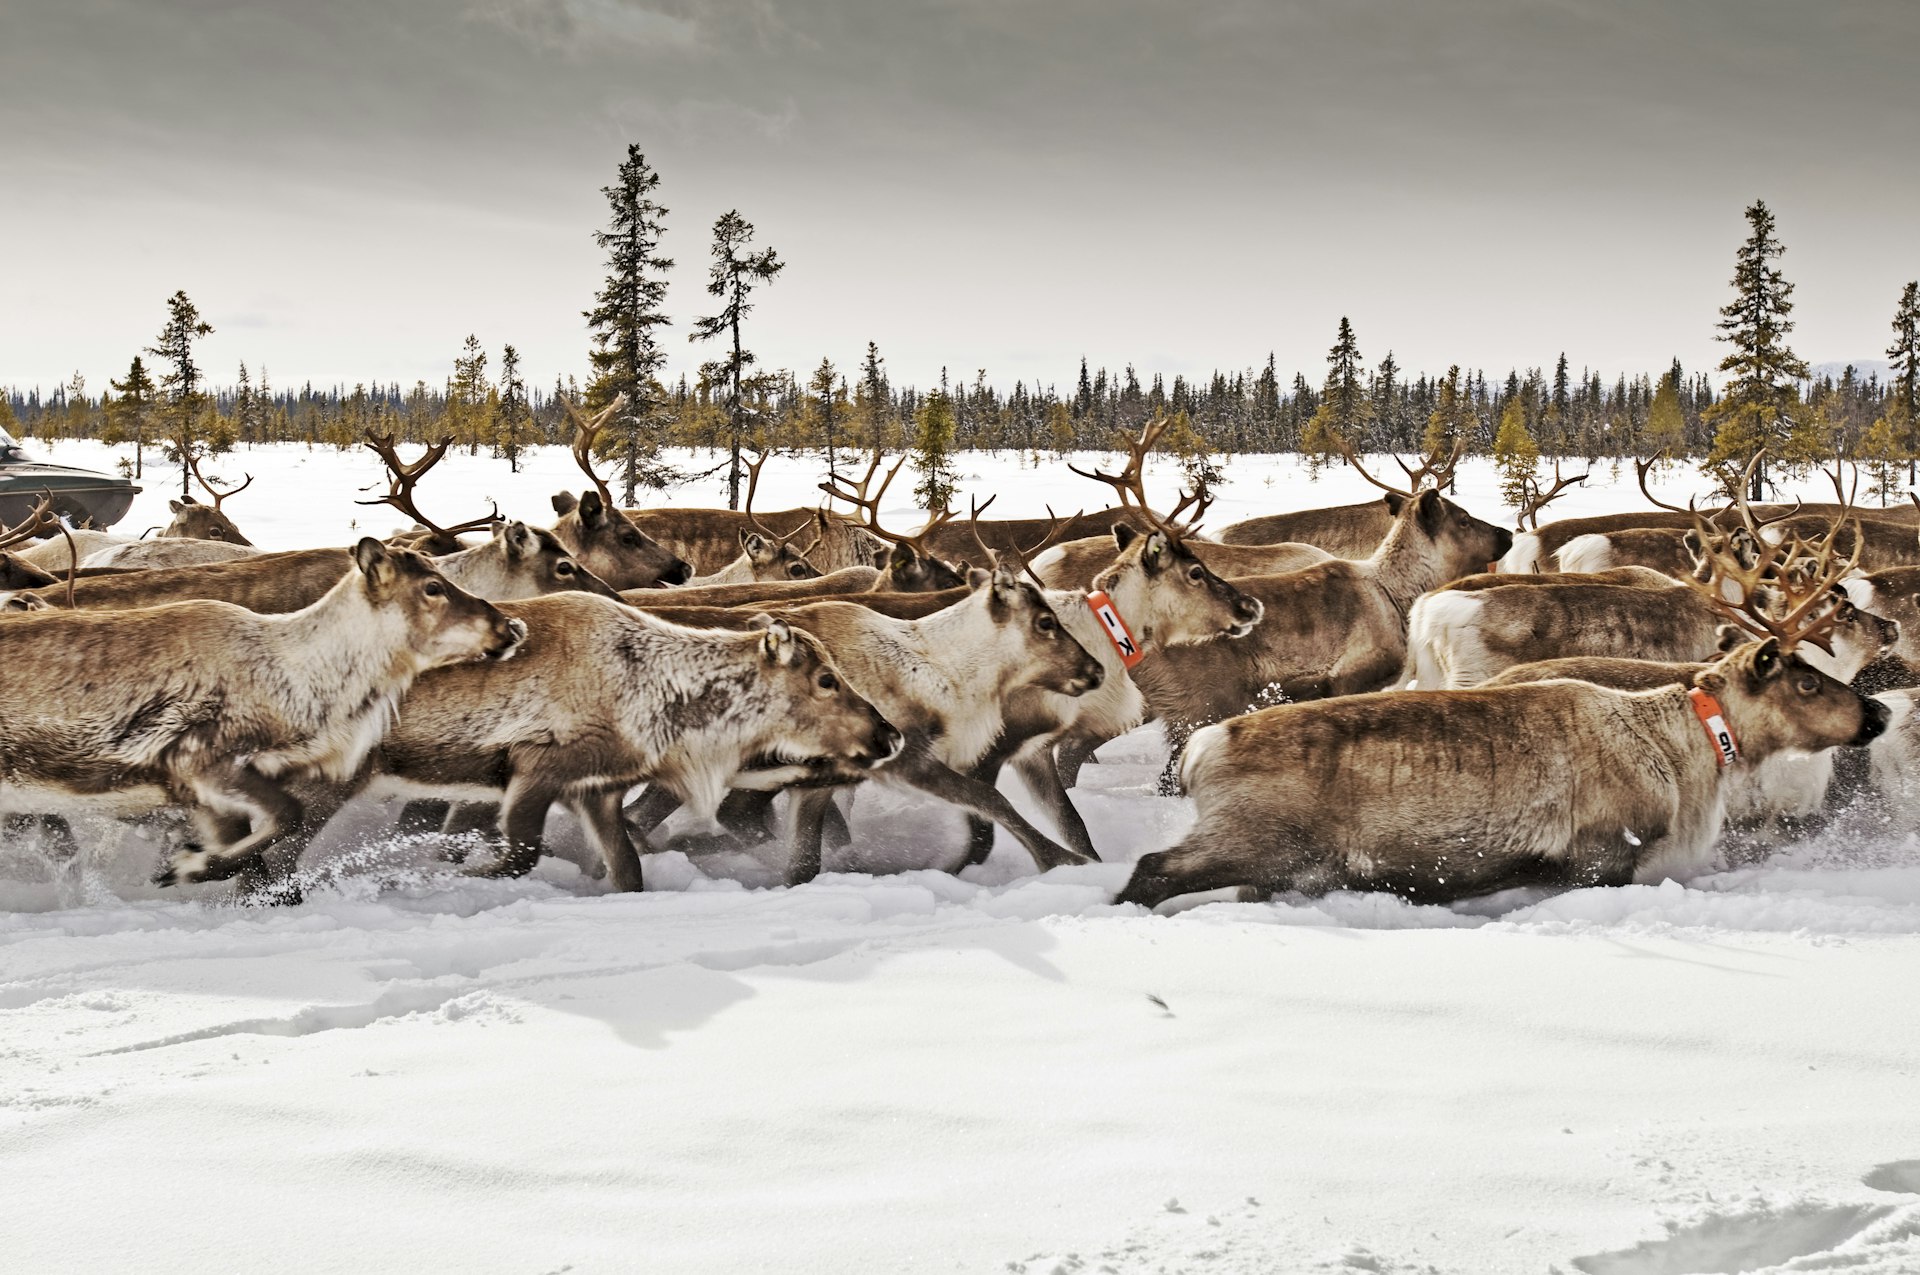 Herd of reindeer galloping through snow covered terrain in Sweden